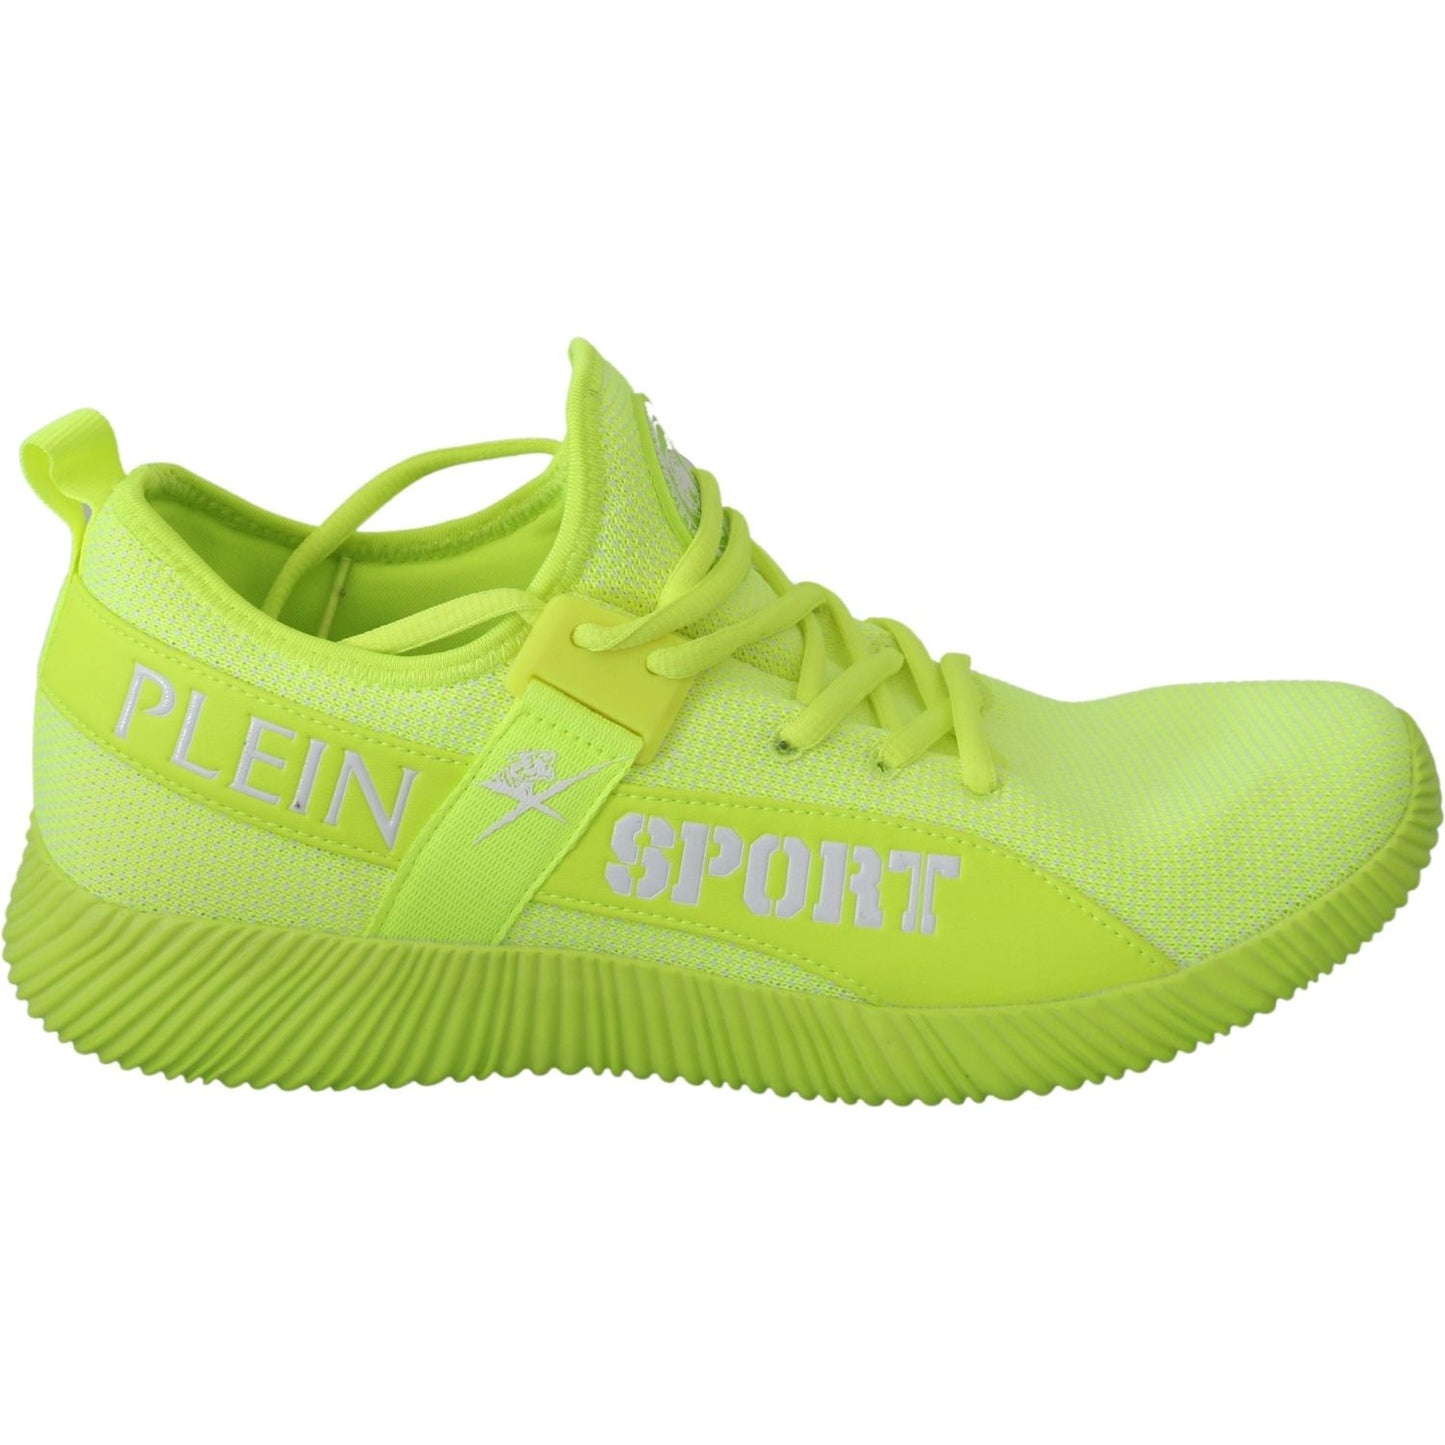 Philipp Plein Stylish Light Green Casual Sneakers MAN SNEAKERS green-carter-logo-hi-top-sneakers-shoes IMG_7546-75c49955-55b.jpg